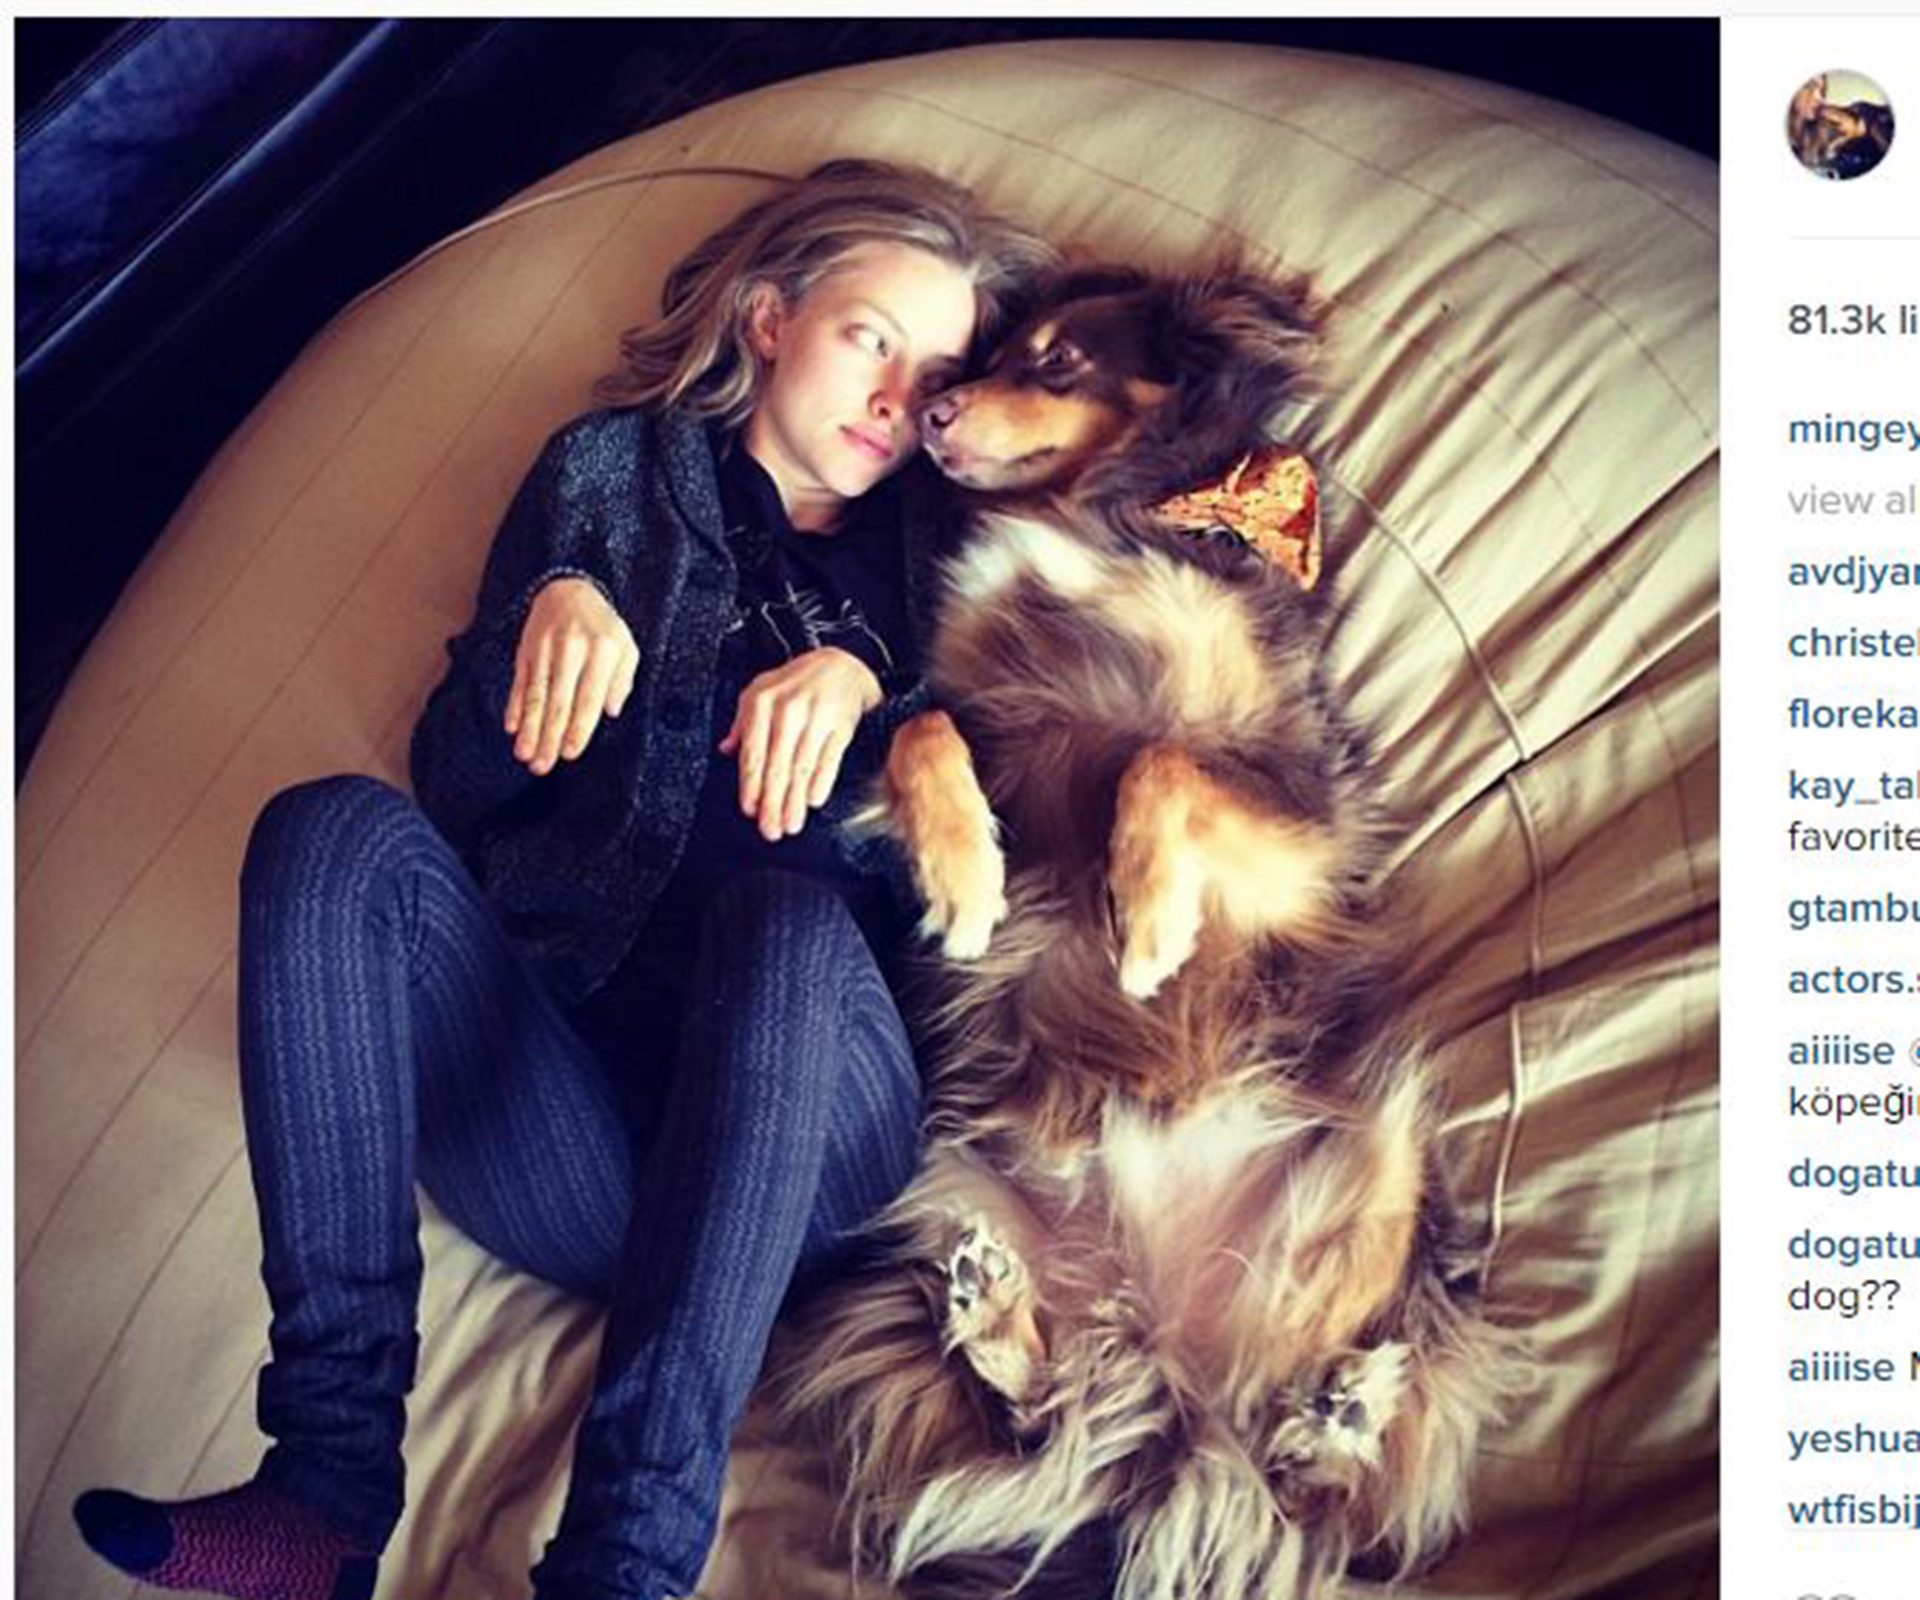 10 times Amanda Seyfried’s dog was the cutest